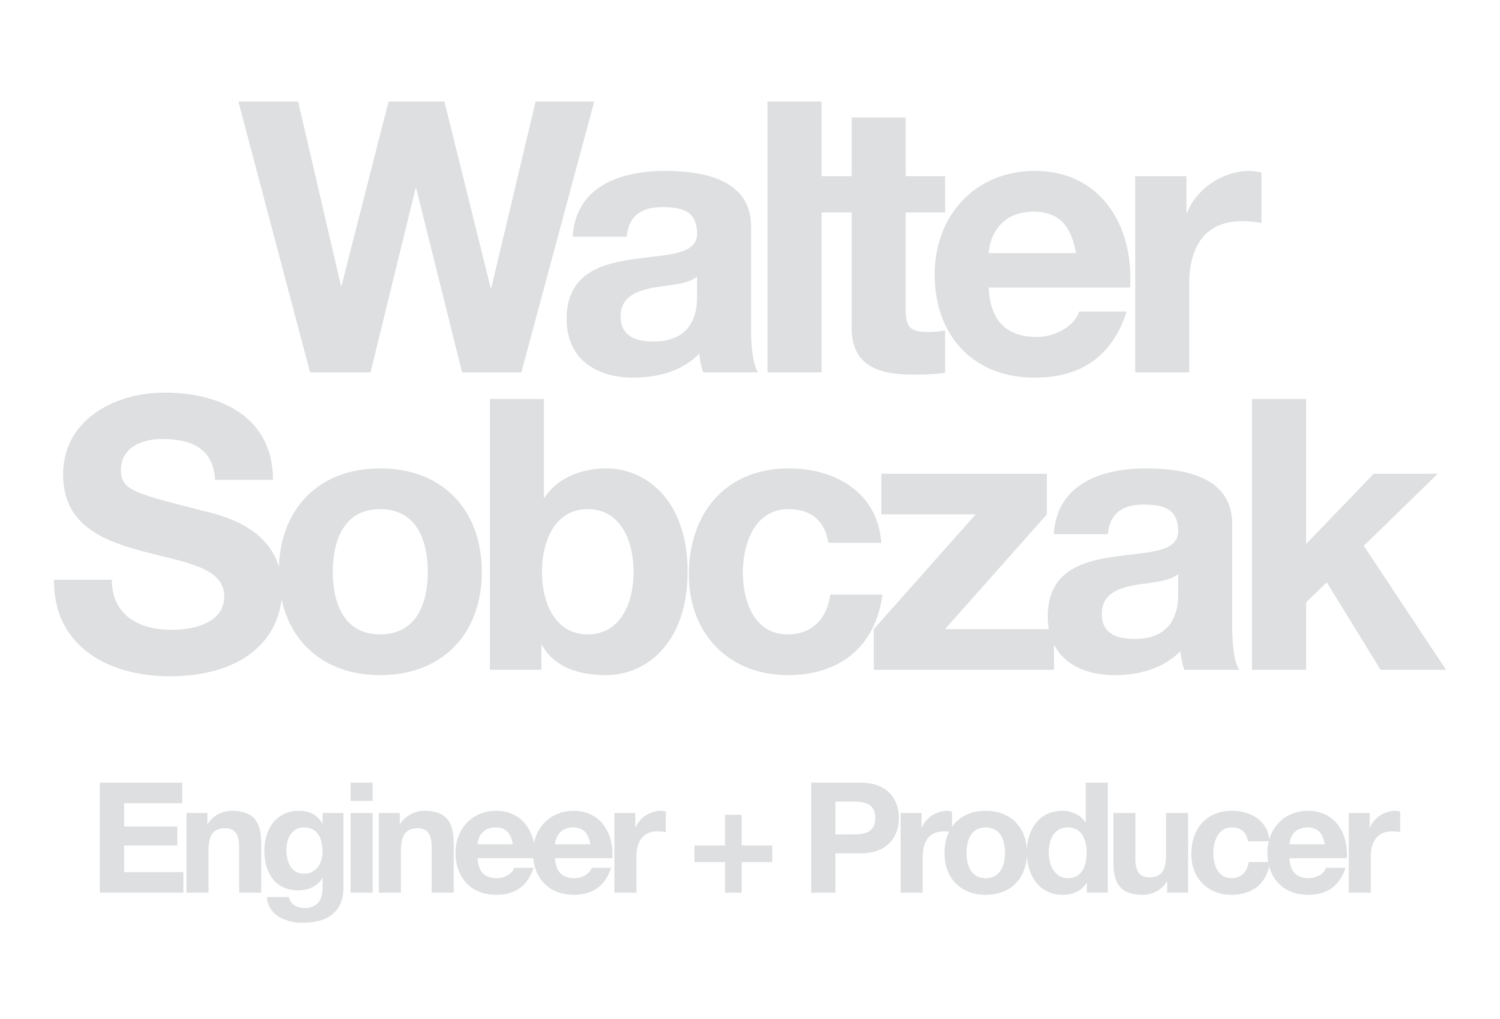 Walter Sobczak